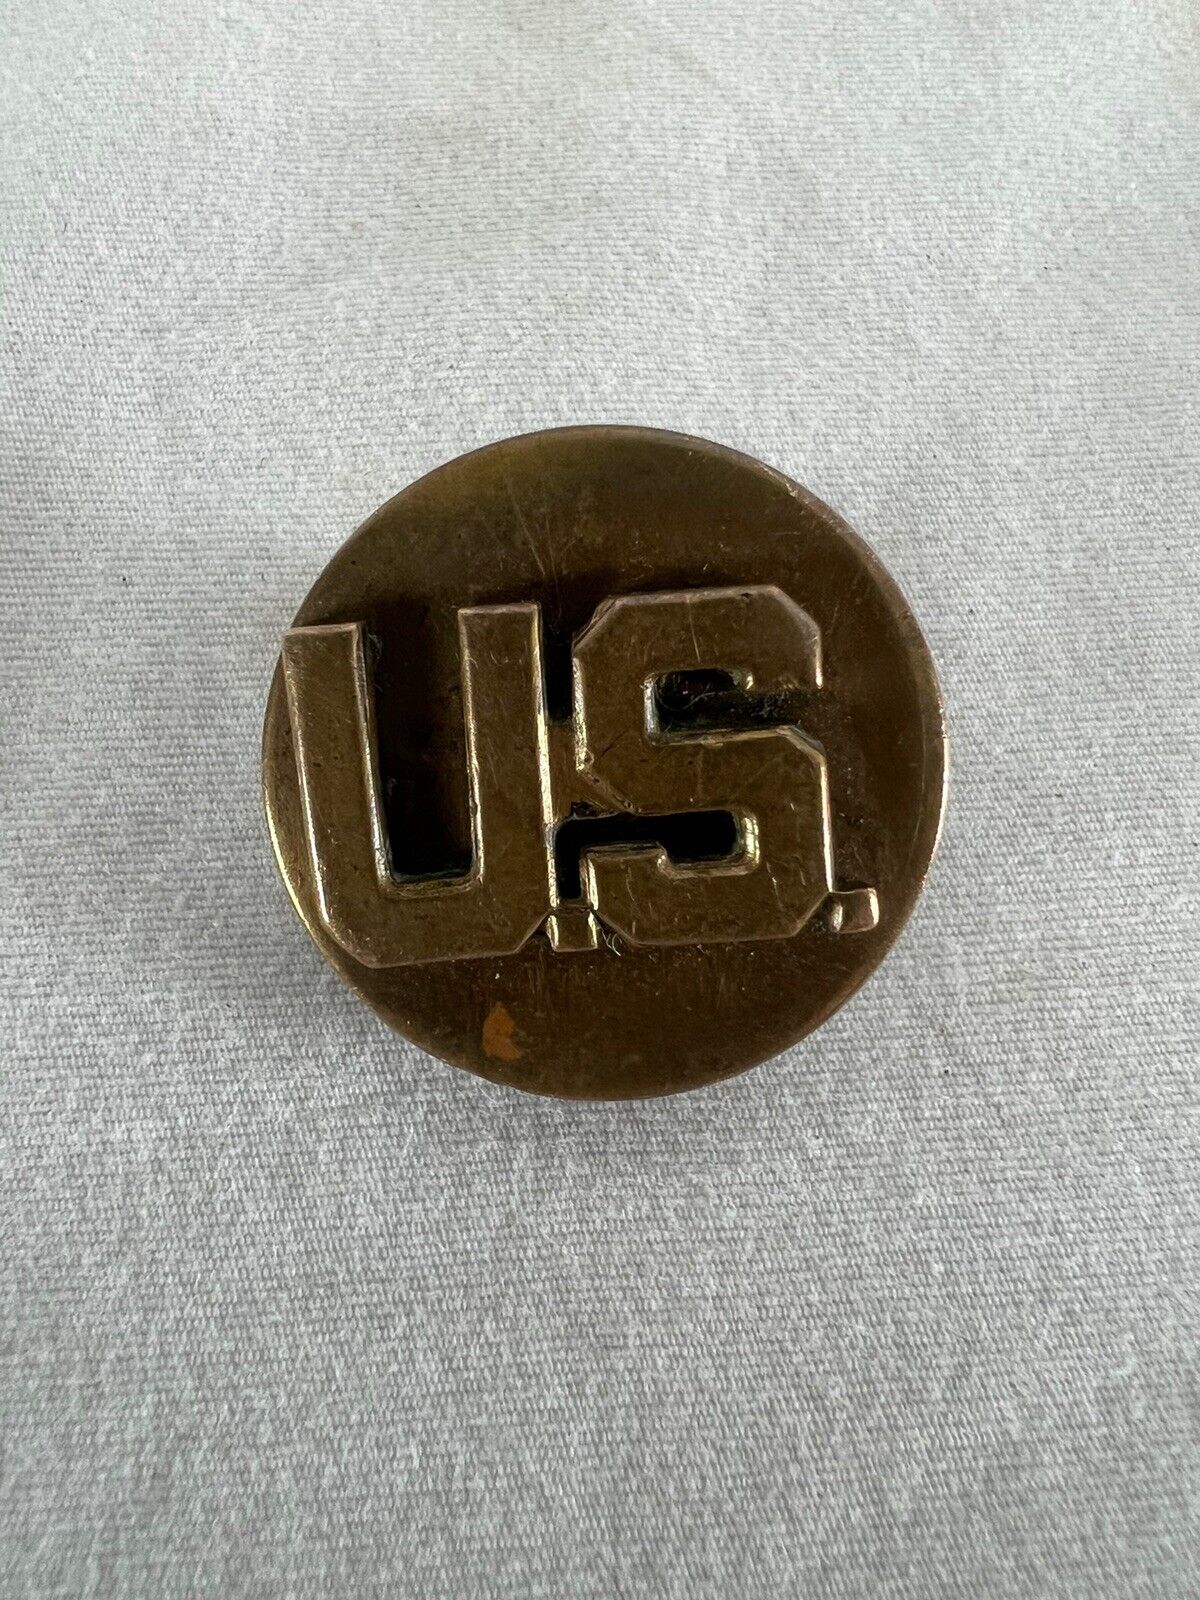 WW2 US Collar Disc screw back